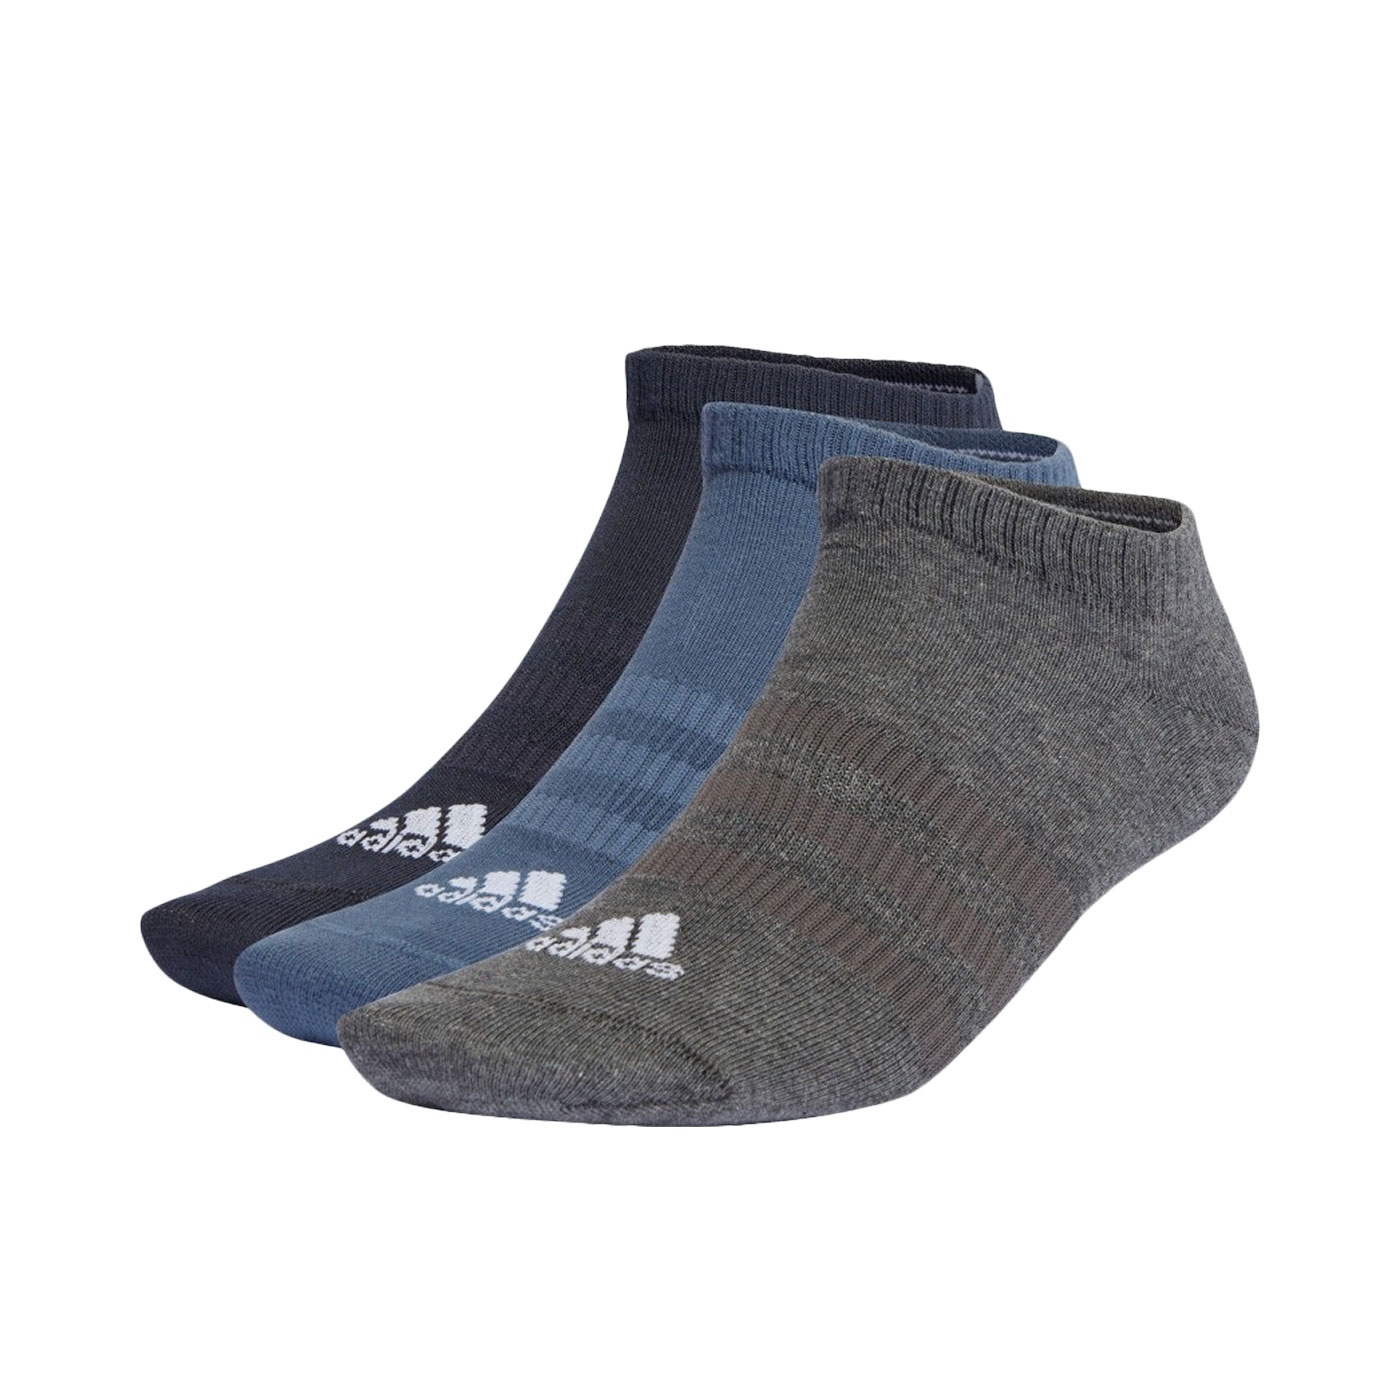 ADIDAS 運動短襪(三雙入)  IP0399 - 灰藍丈青白